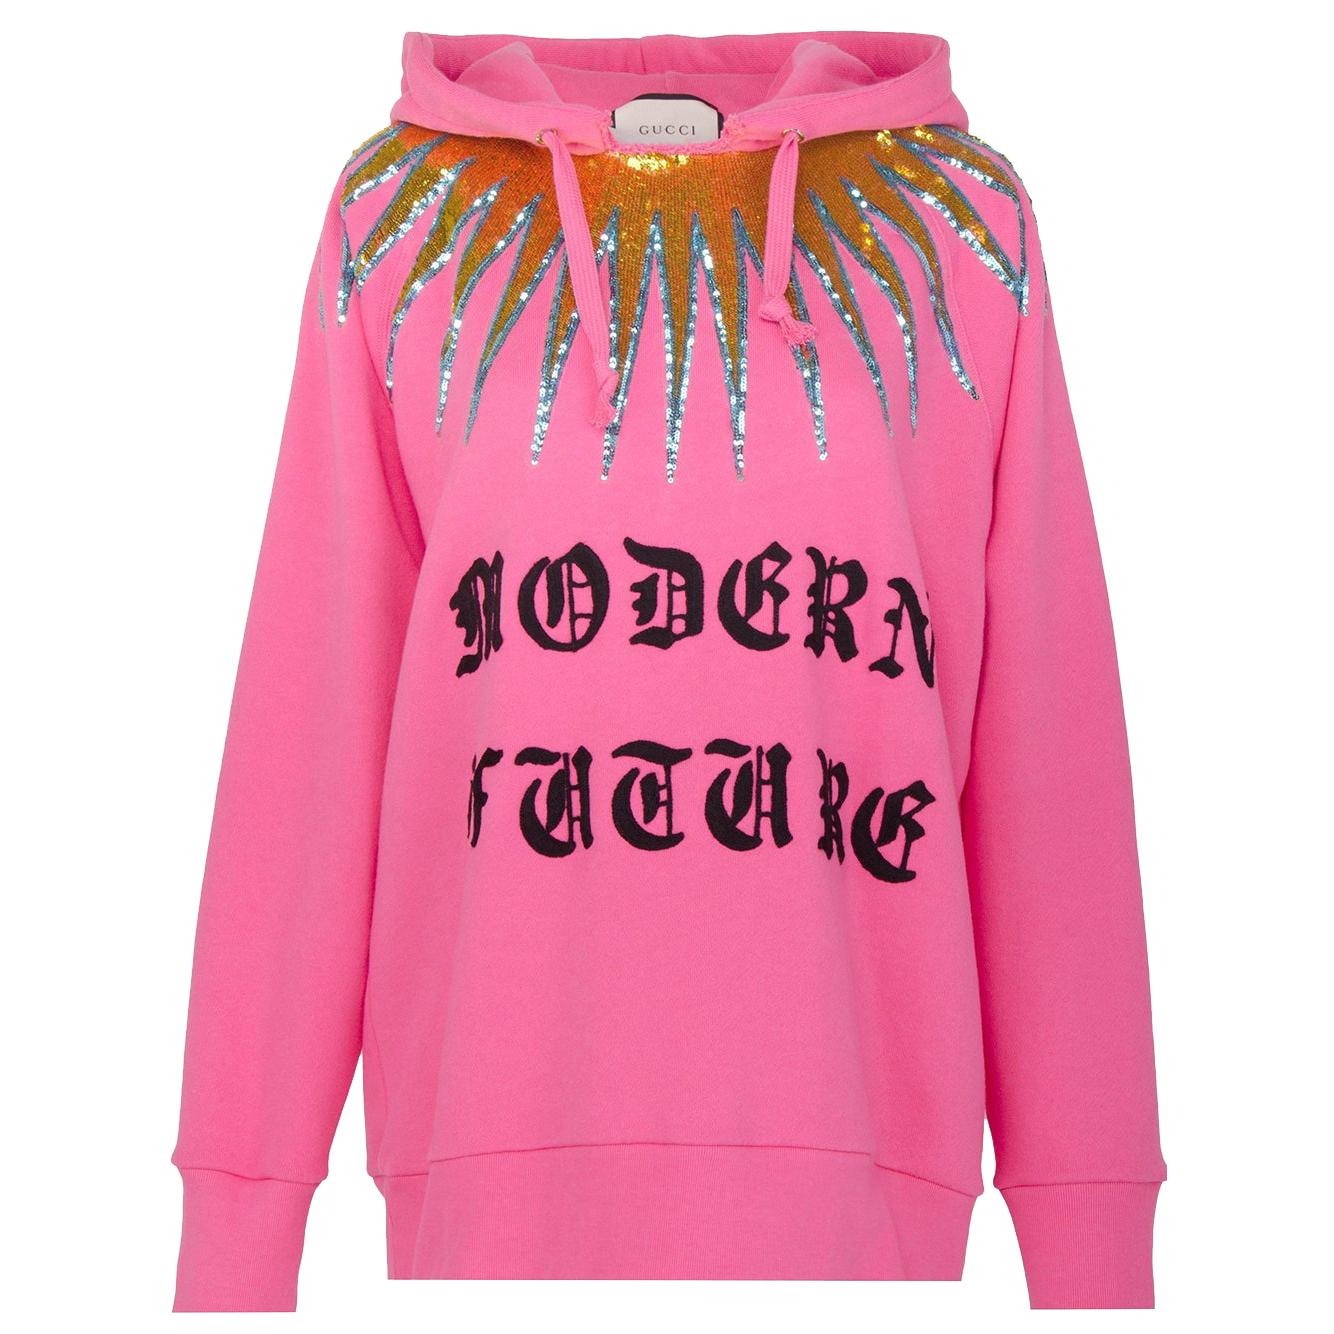 gucci modern future sweatshirt